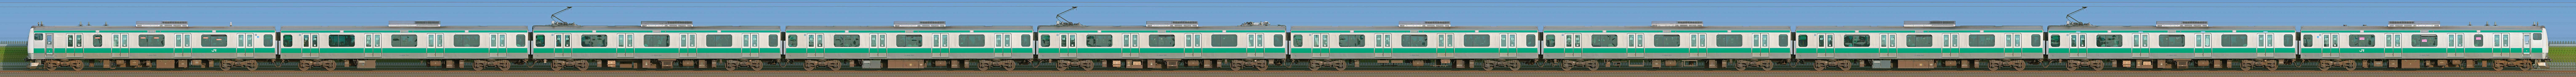 JR東日本 埼京線 E233系7000番台ハエ131編成（線路設備モニタリング装置対応編成・海側）の編成サイドビュー